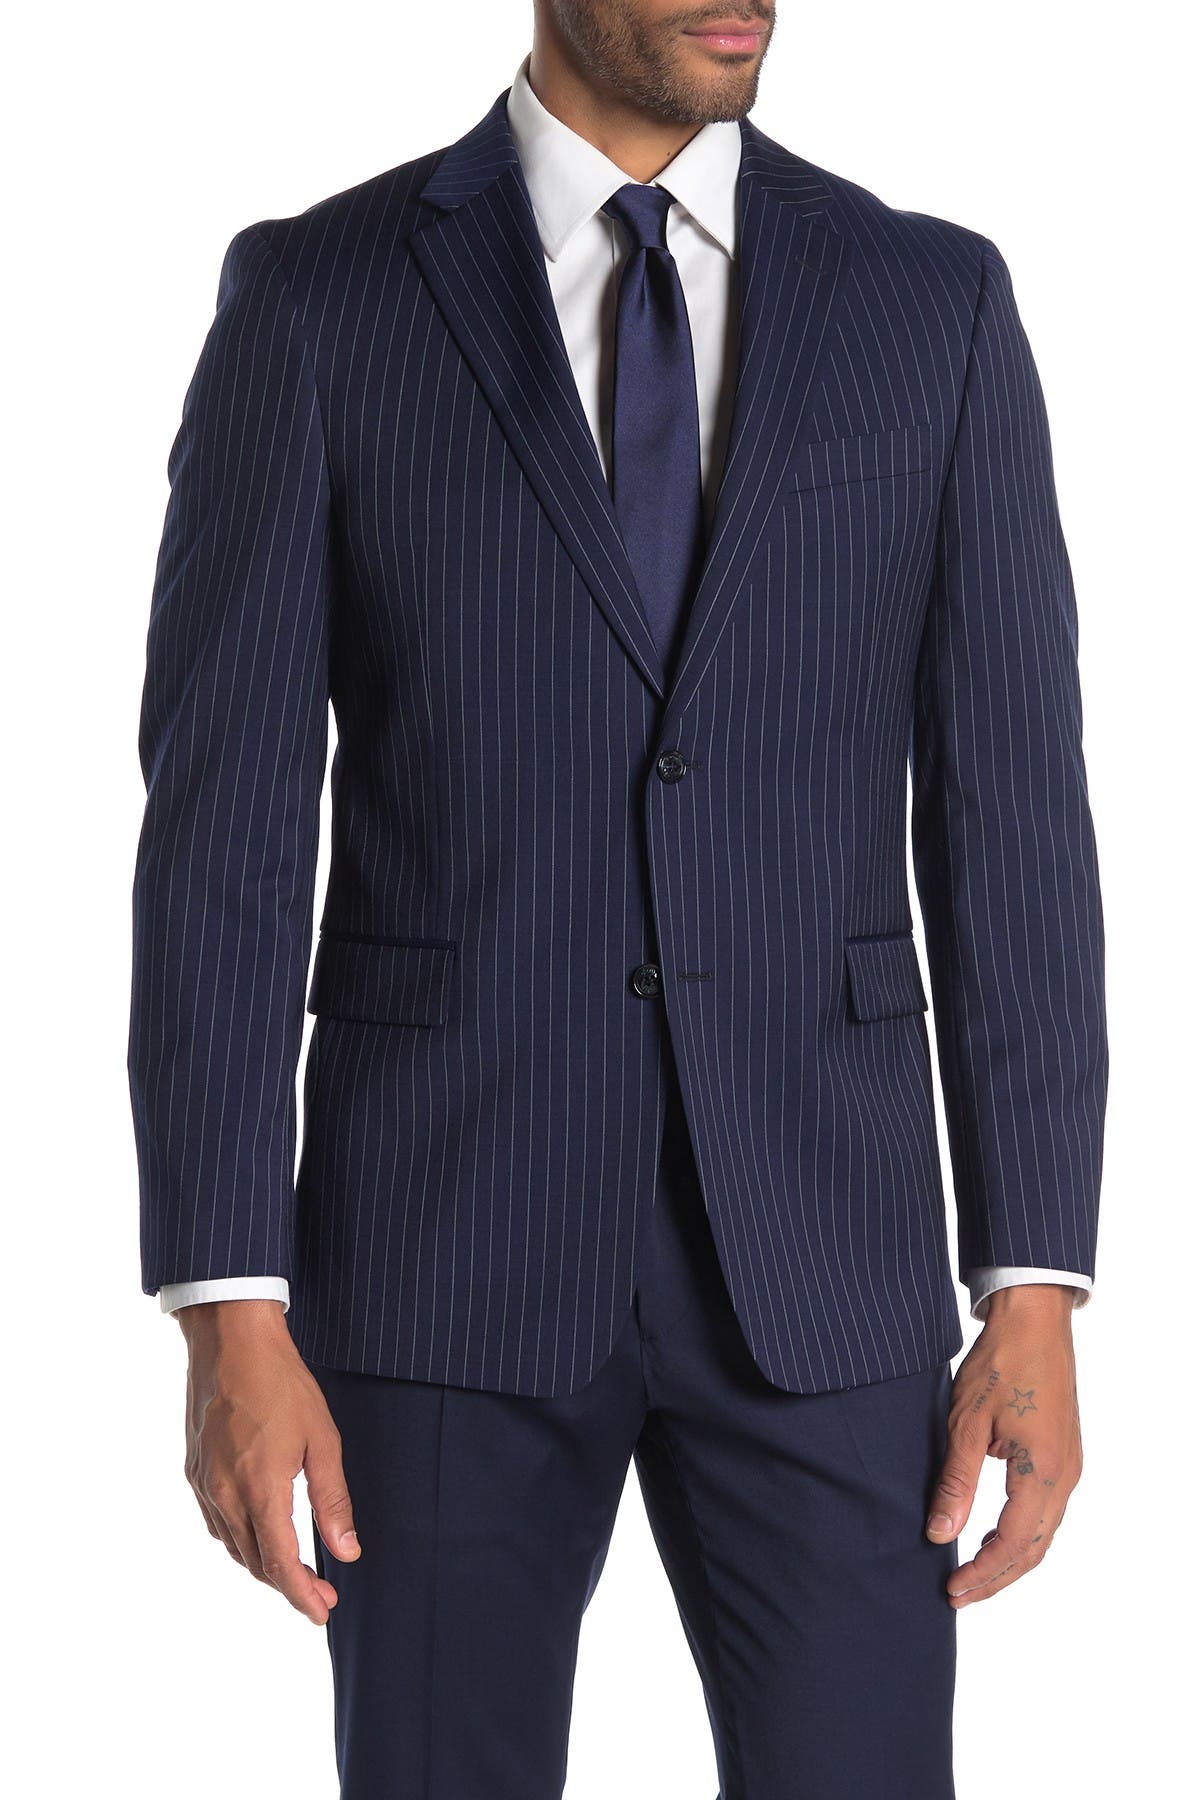 tommy hilfiger suit quality